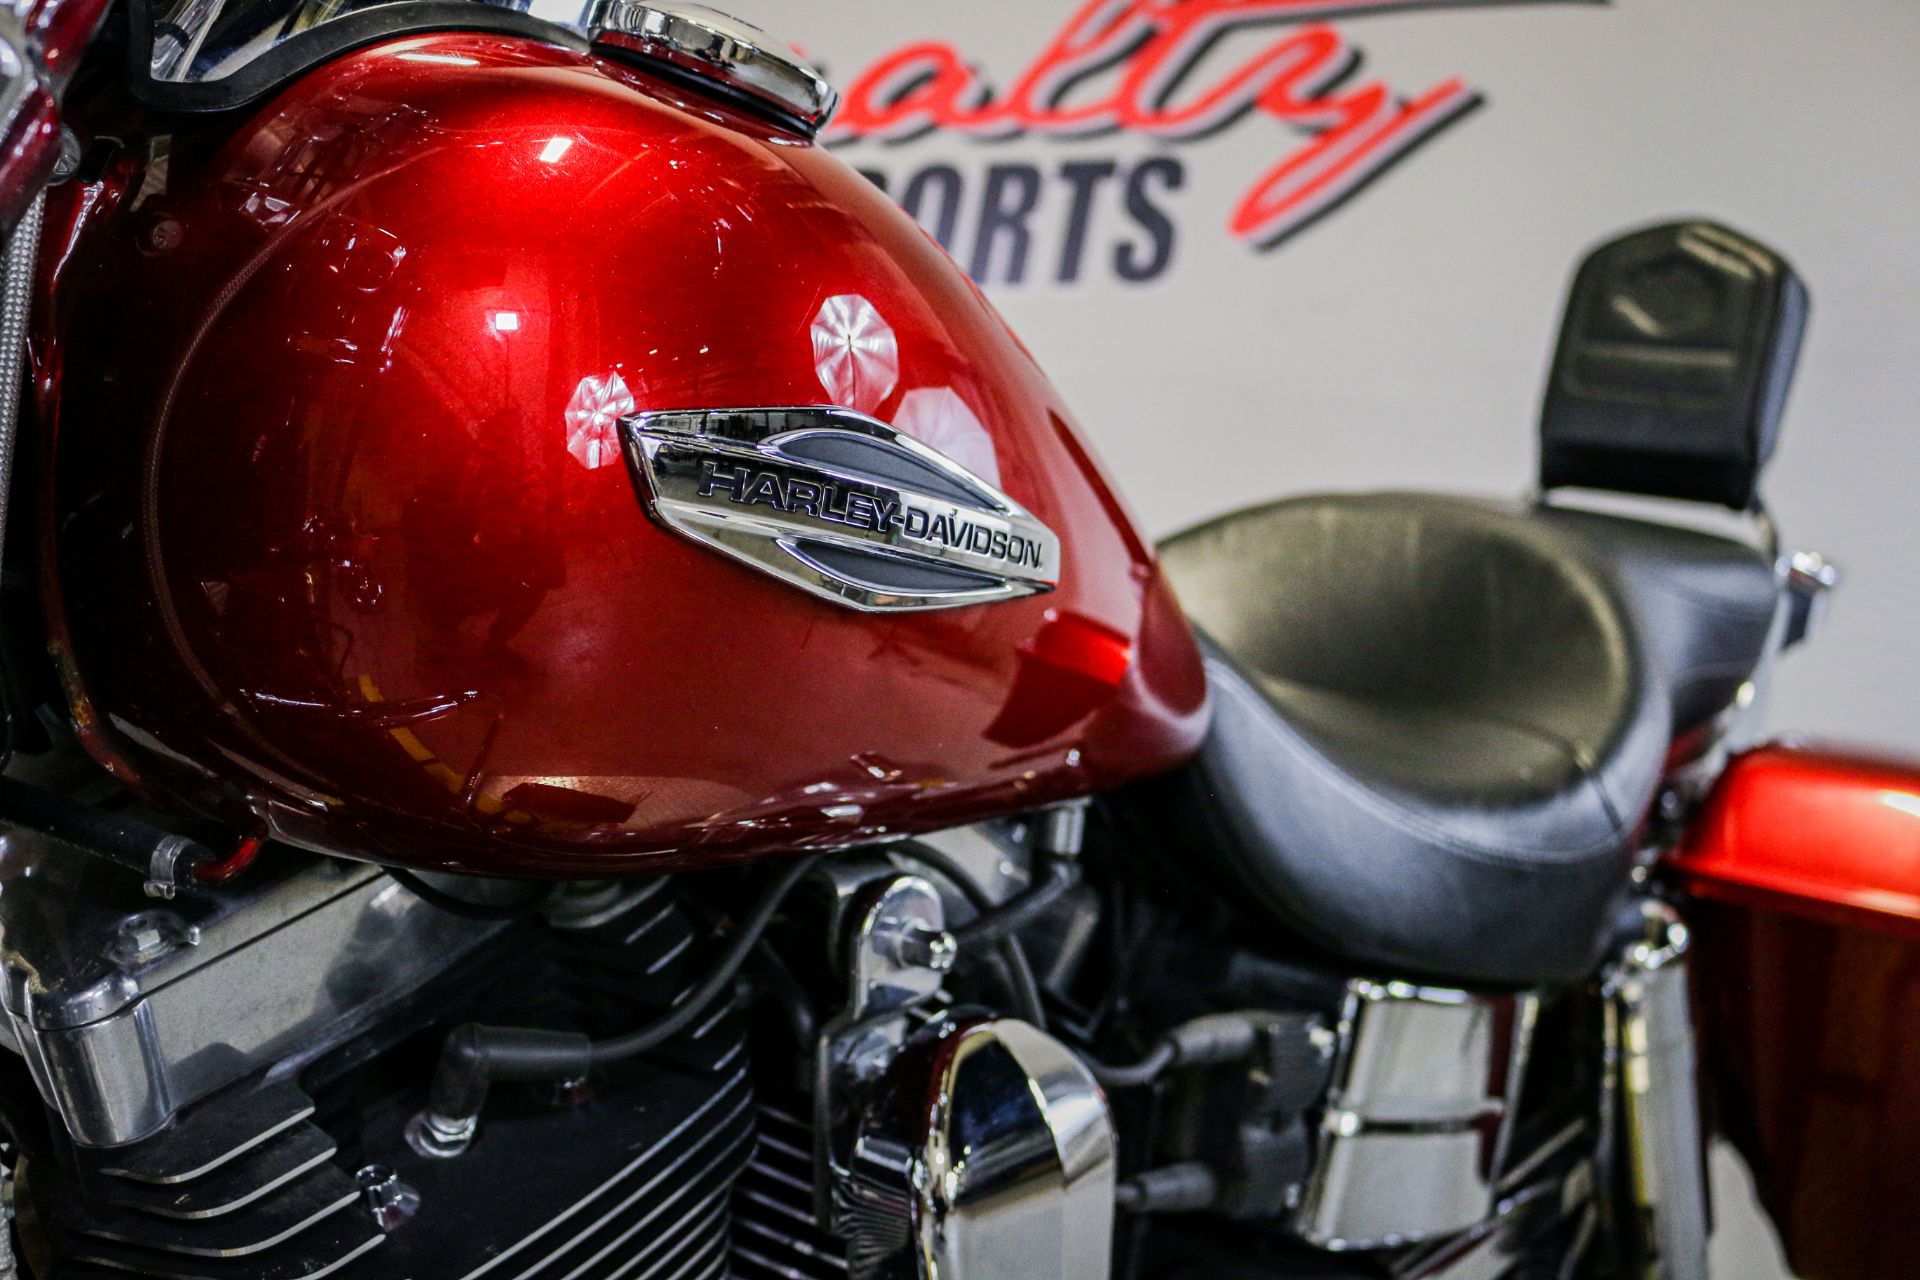 2012 Harley-Davidson Dyna® Switchback in Sacramento, California - Photo 6